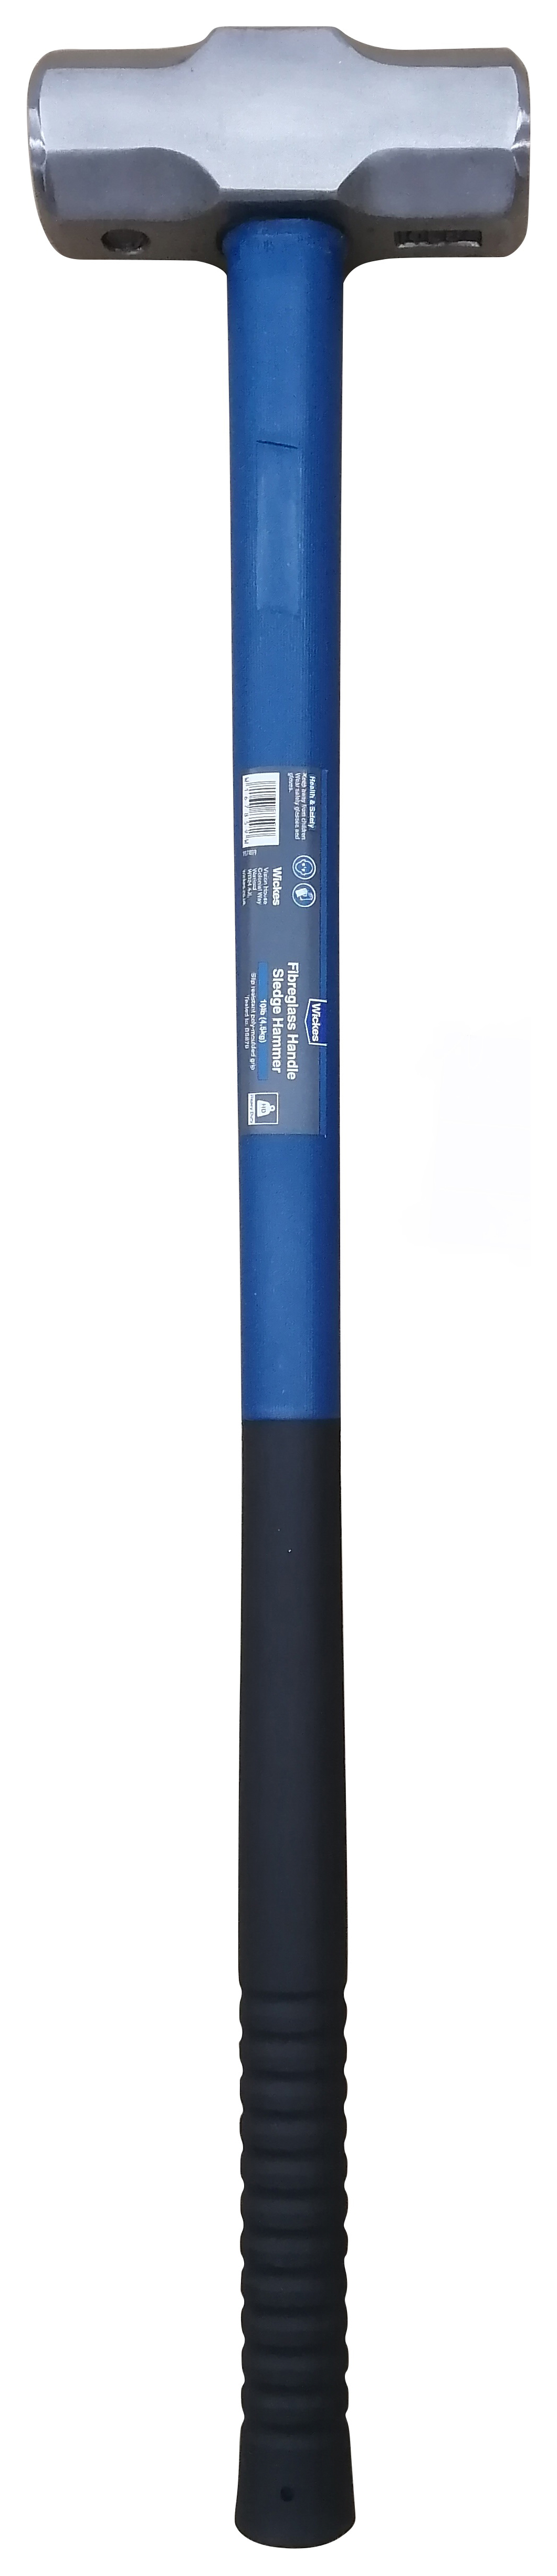 Image of Wickes Powastrike Sledge Hammer - 10lb